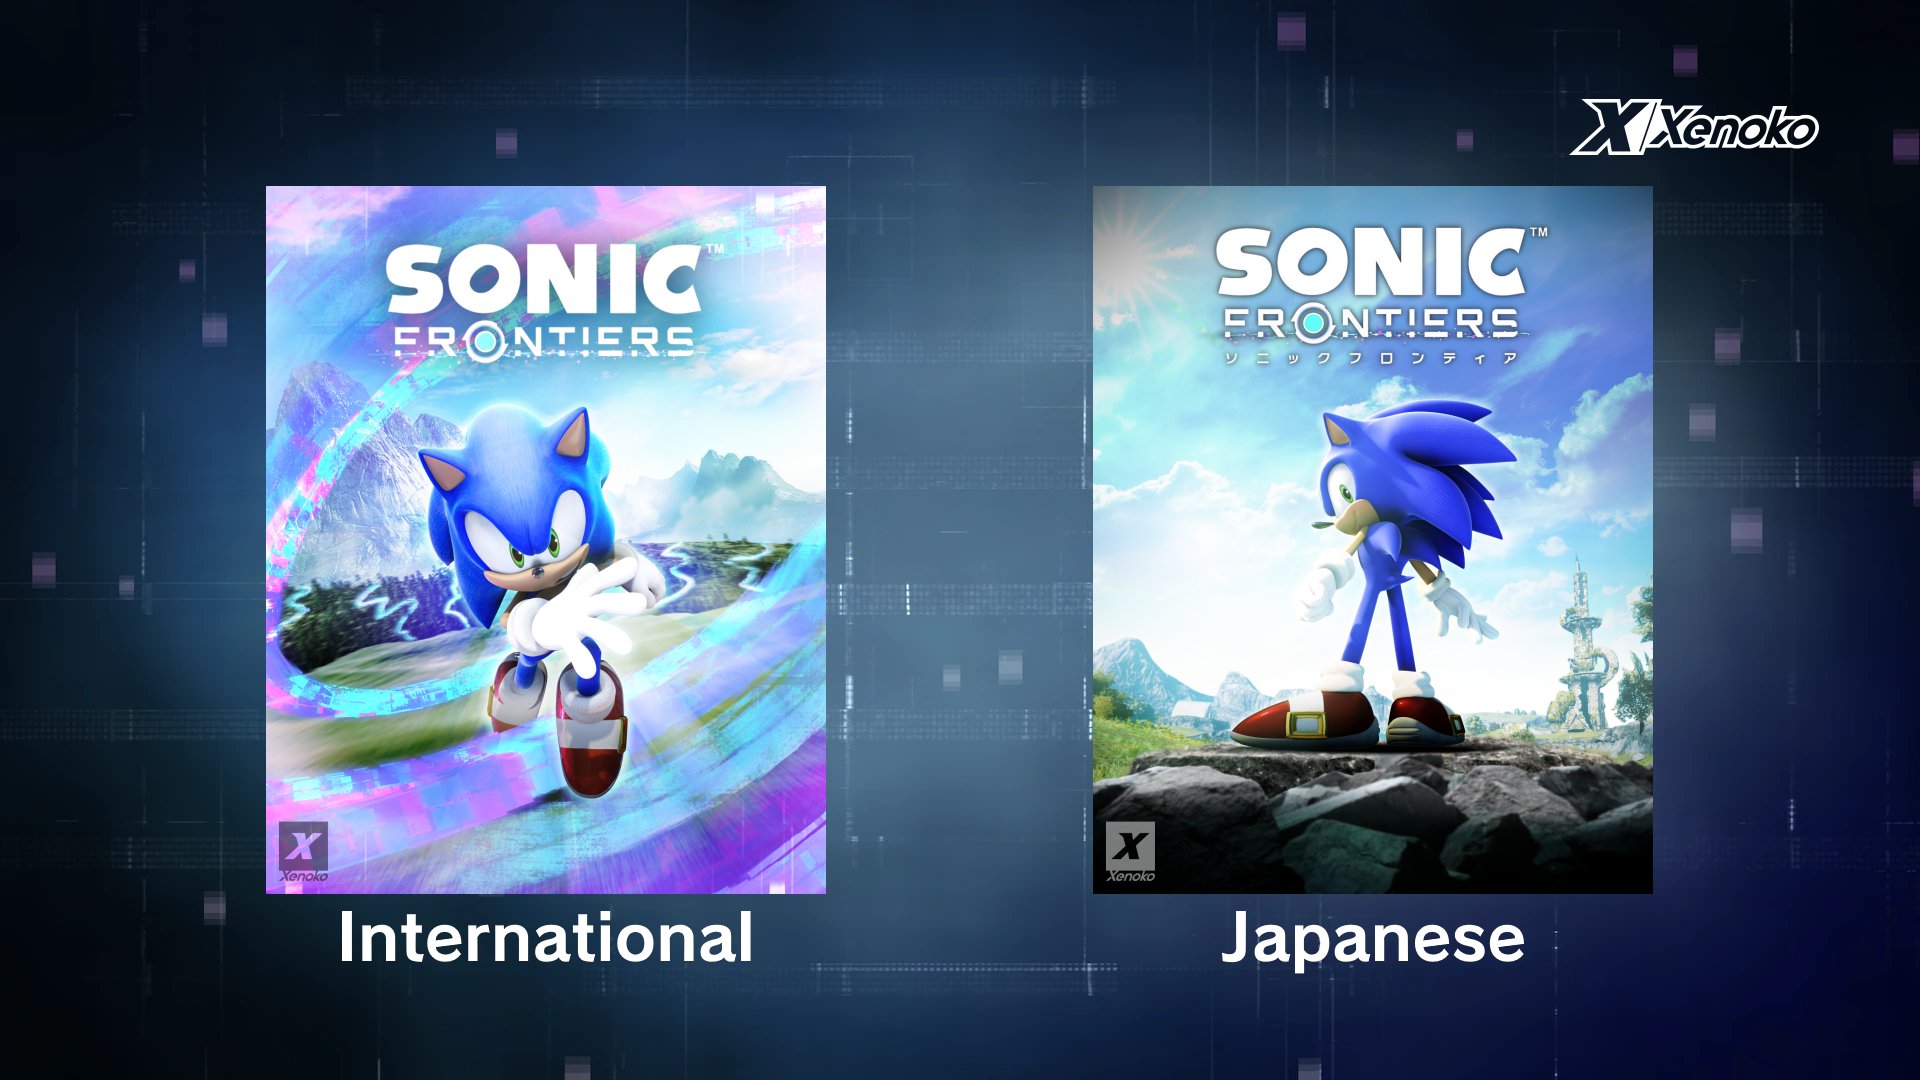 Xenoko on X: Felt like reposting my Sonic Frontiers UI mockups